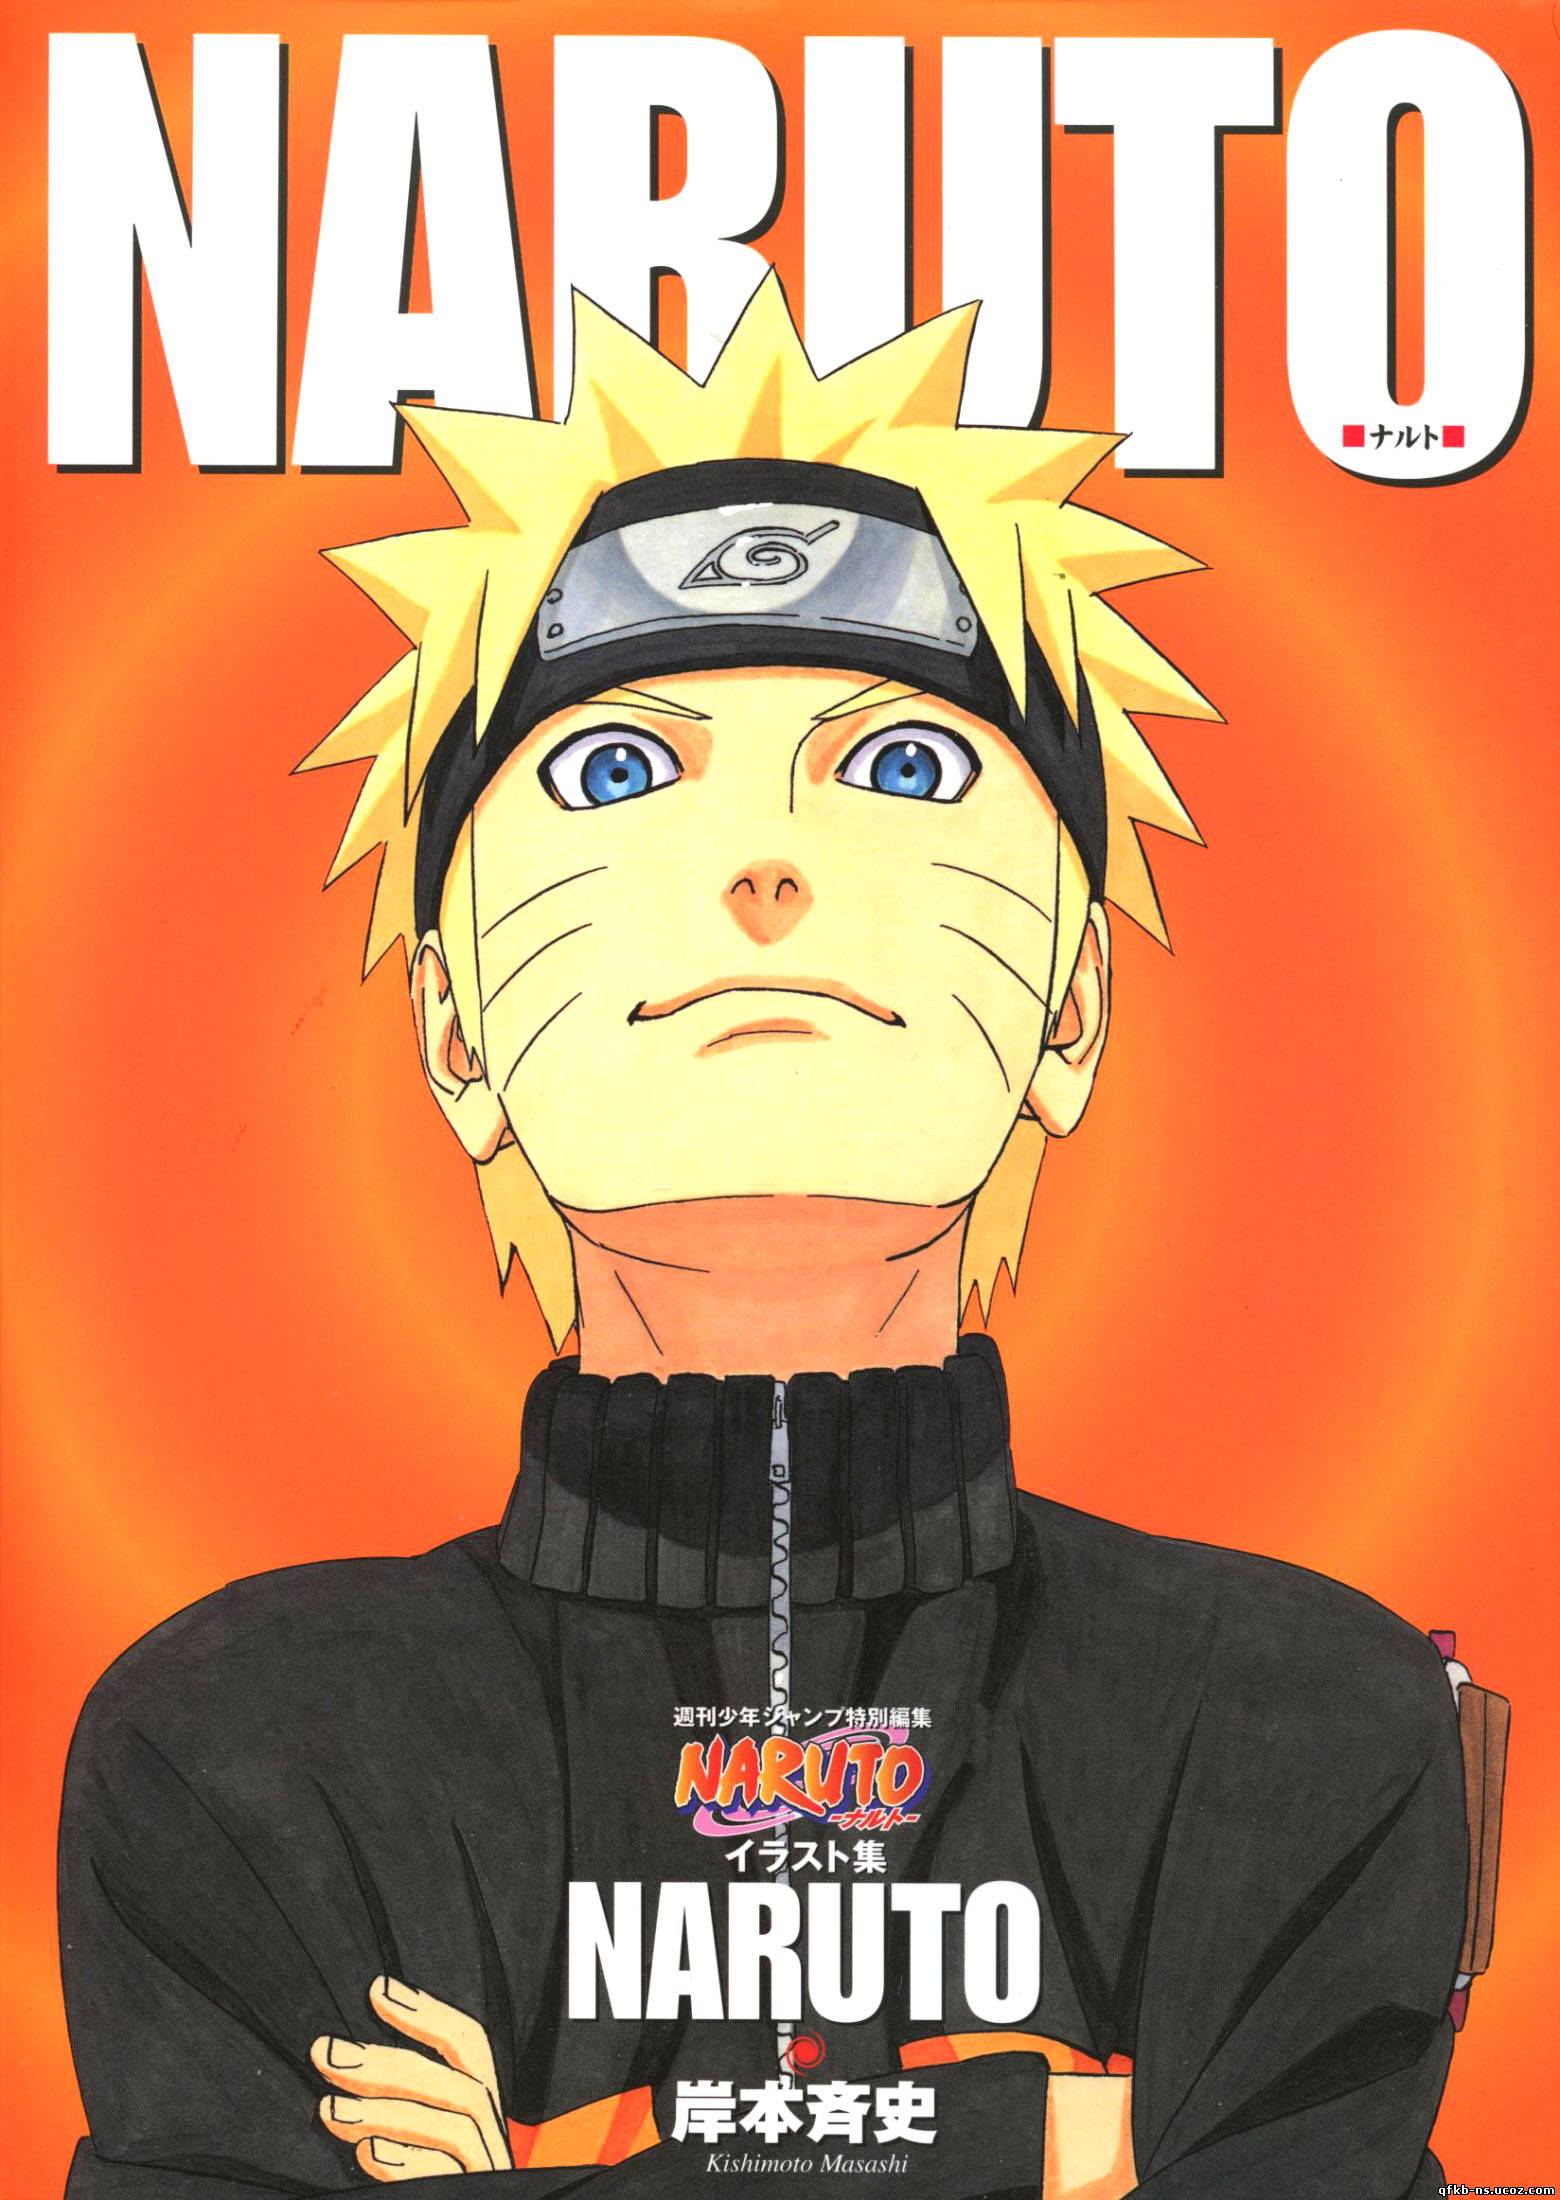 Naruto nuevo artbook